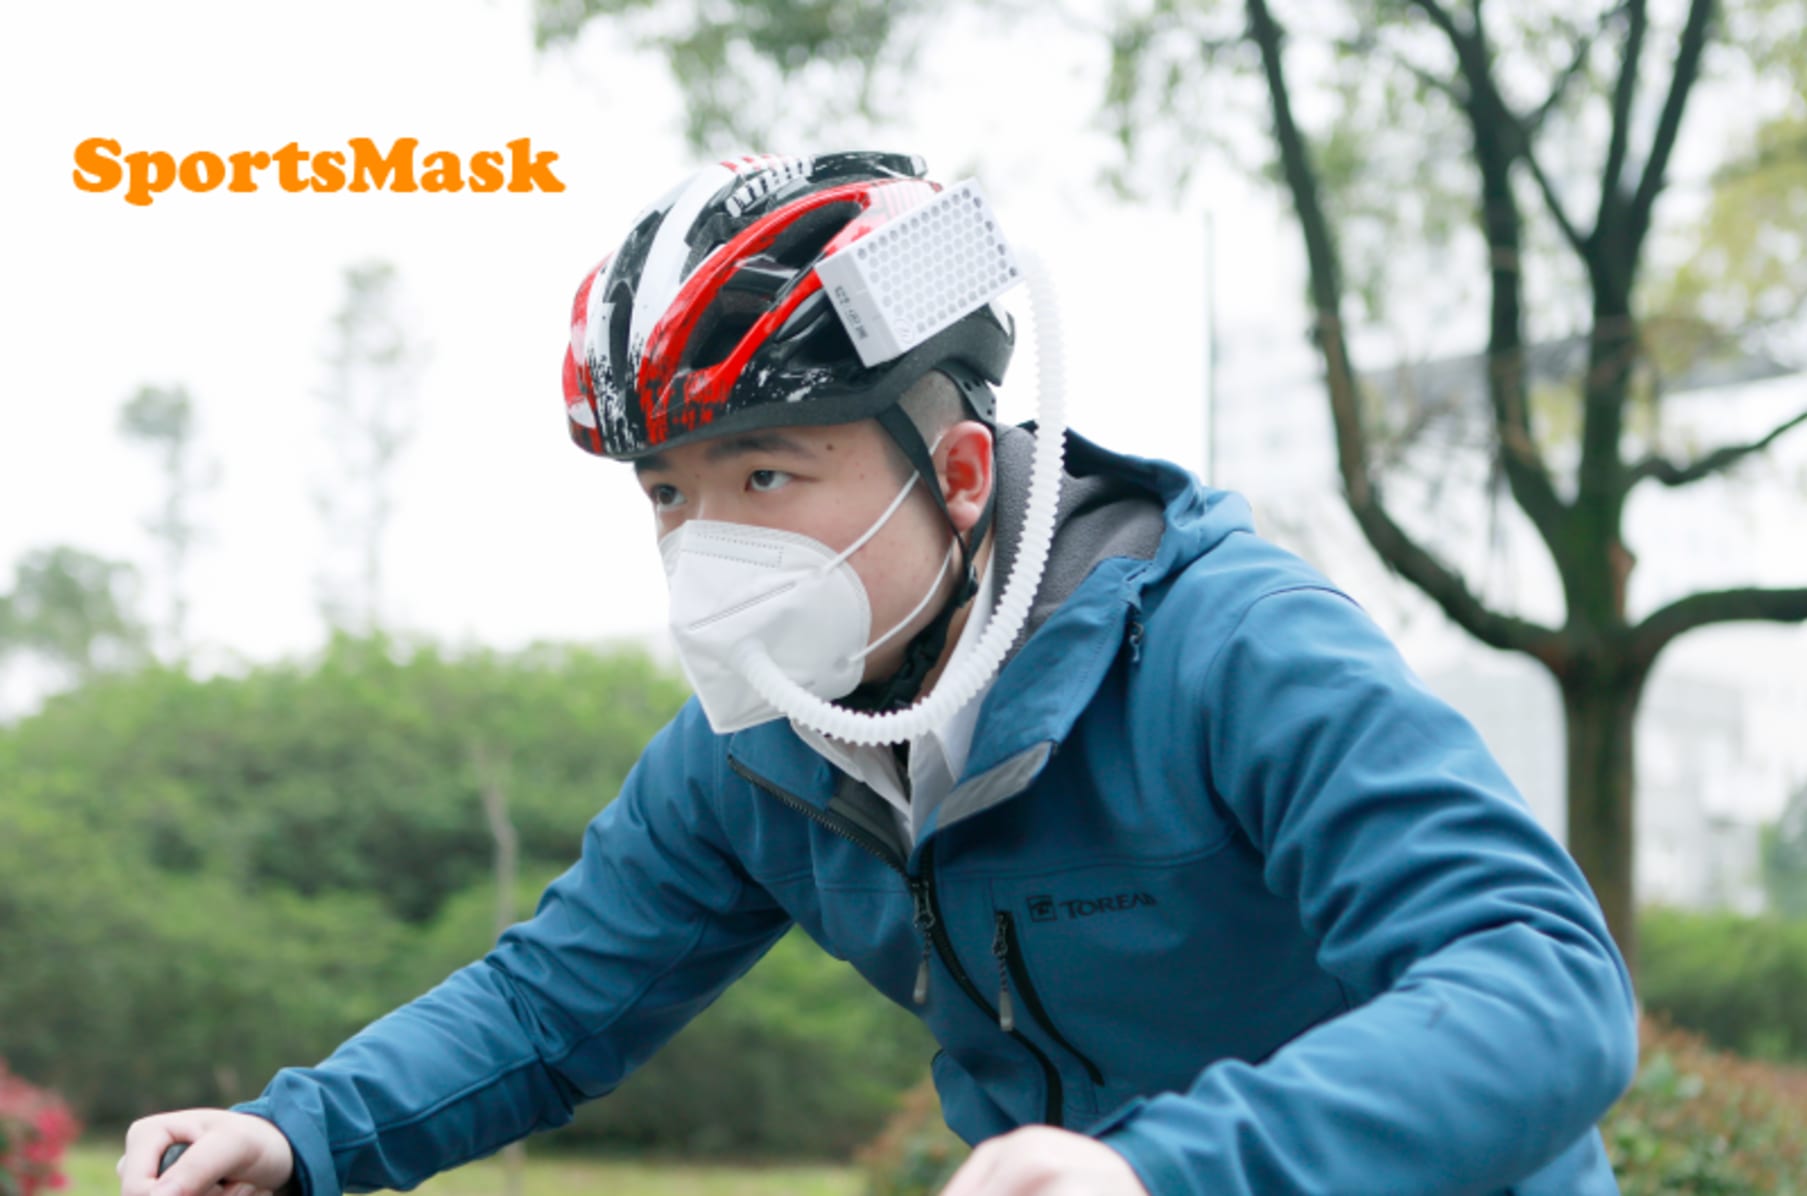 SportsMask Airflow Fan Mask, Training Masks